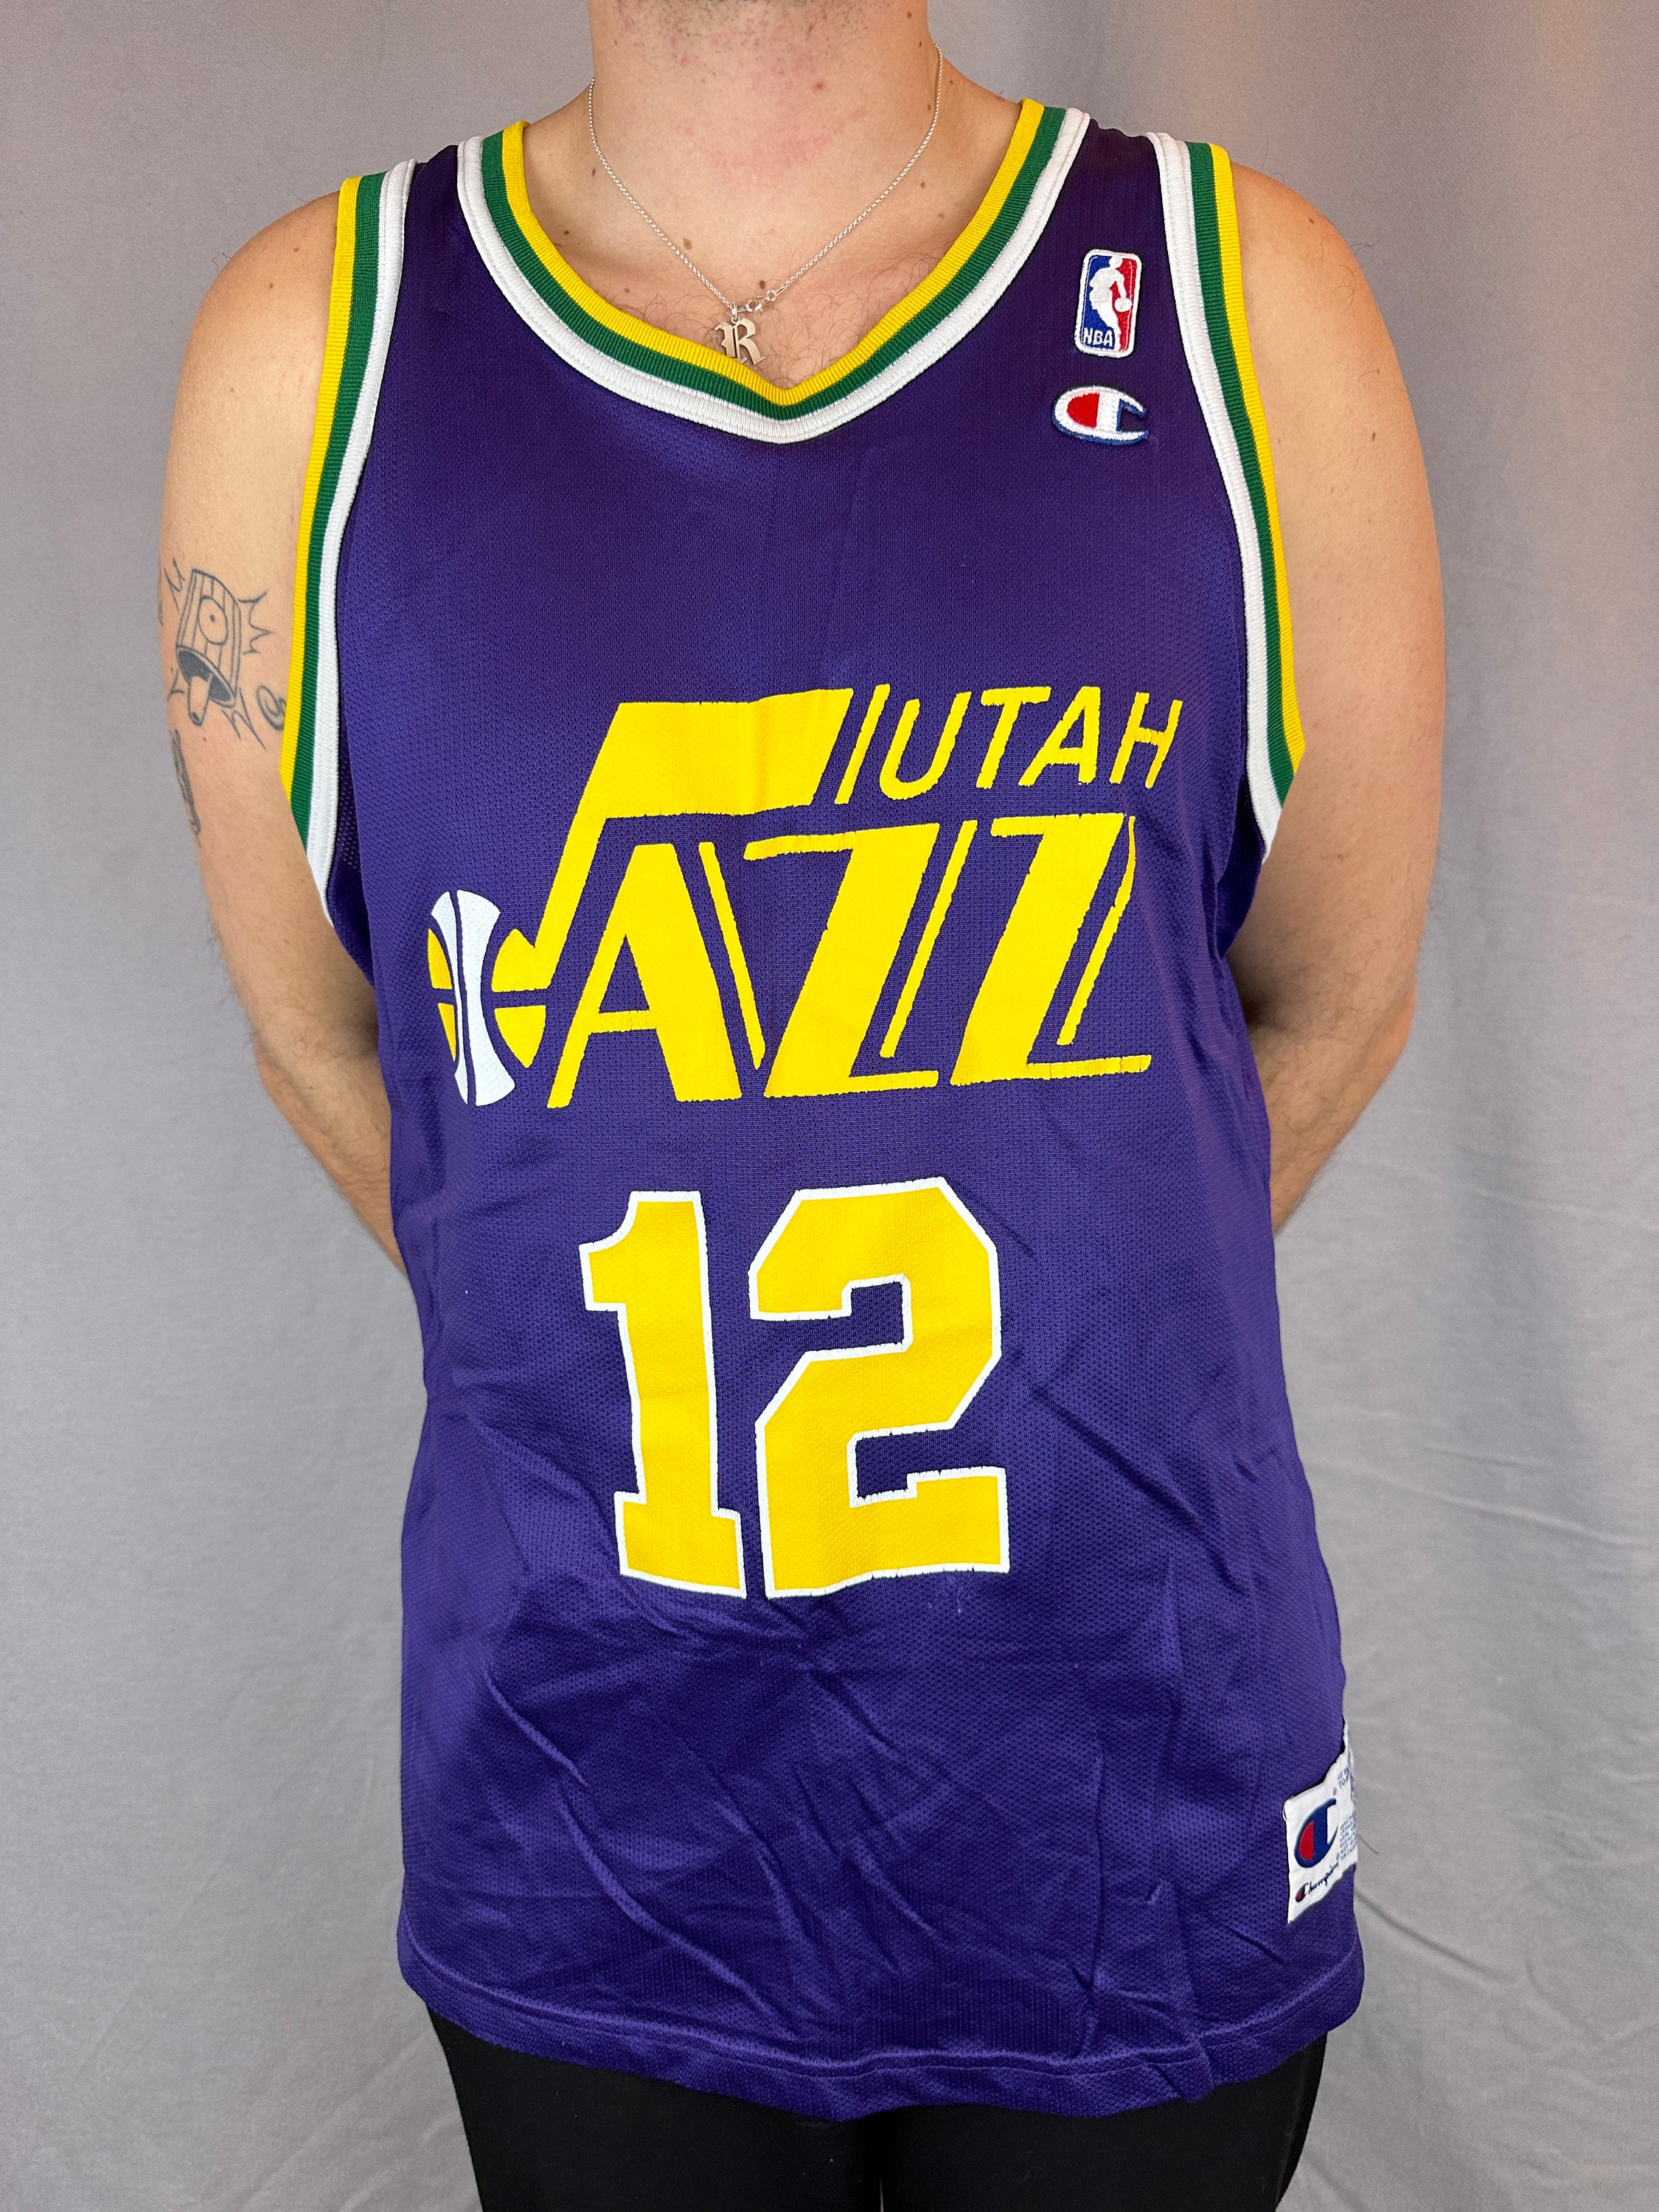 Utah Jazz Nike NBA Authentics Practice Jersey - Basketball Men's